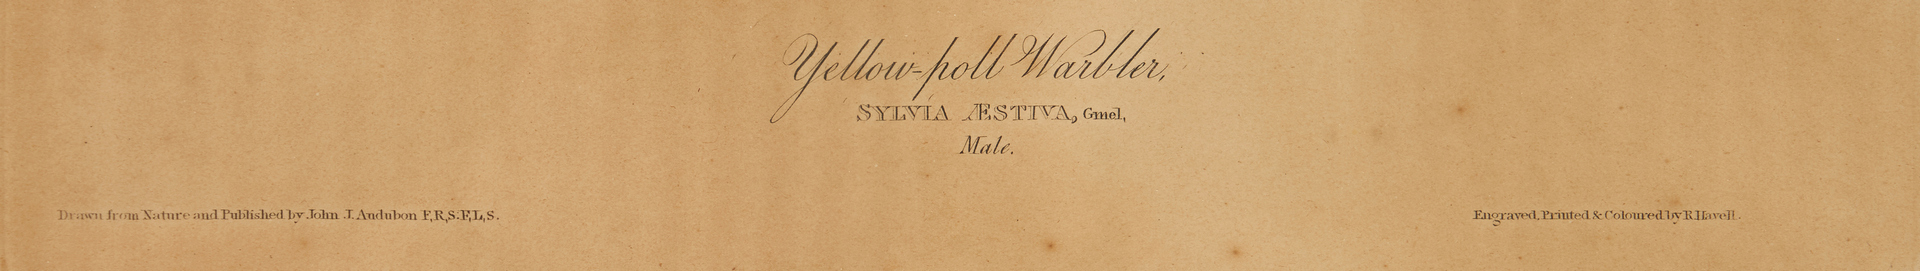 Lot 669: J. Audubon, Yellow-Poll Warbler, Havell Edition